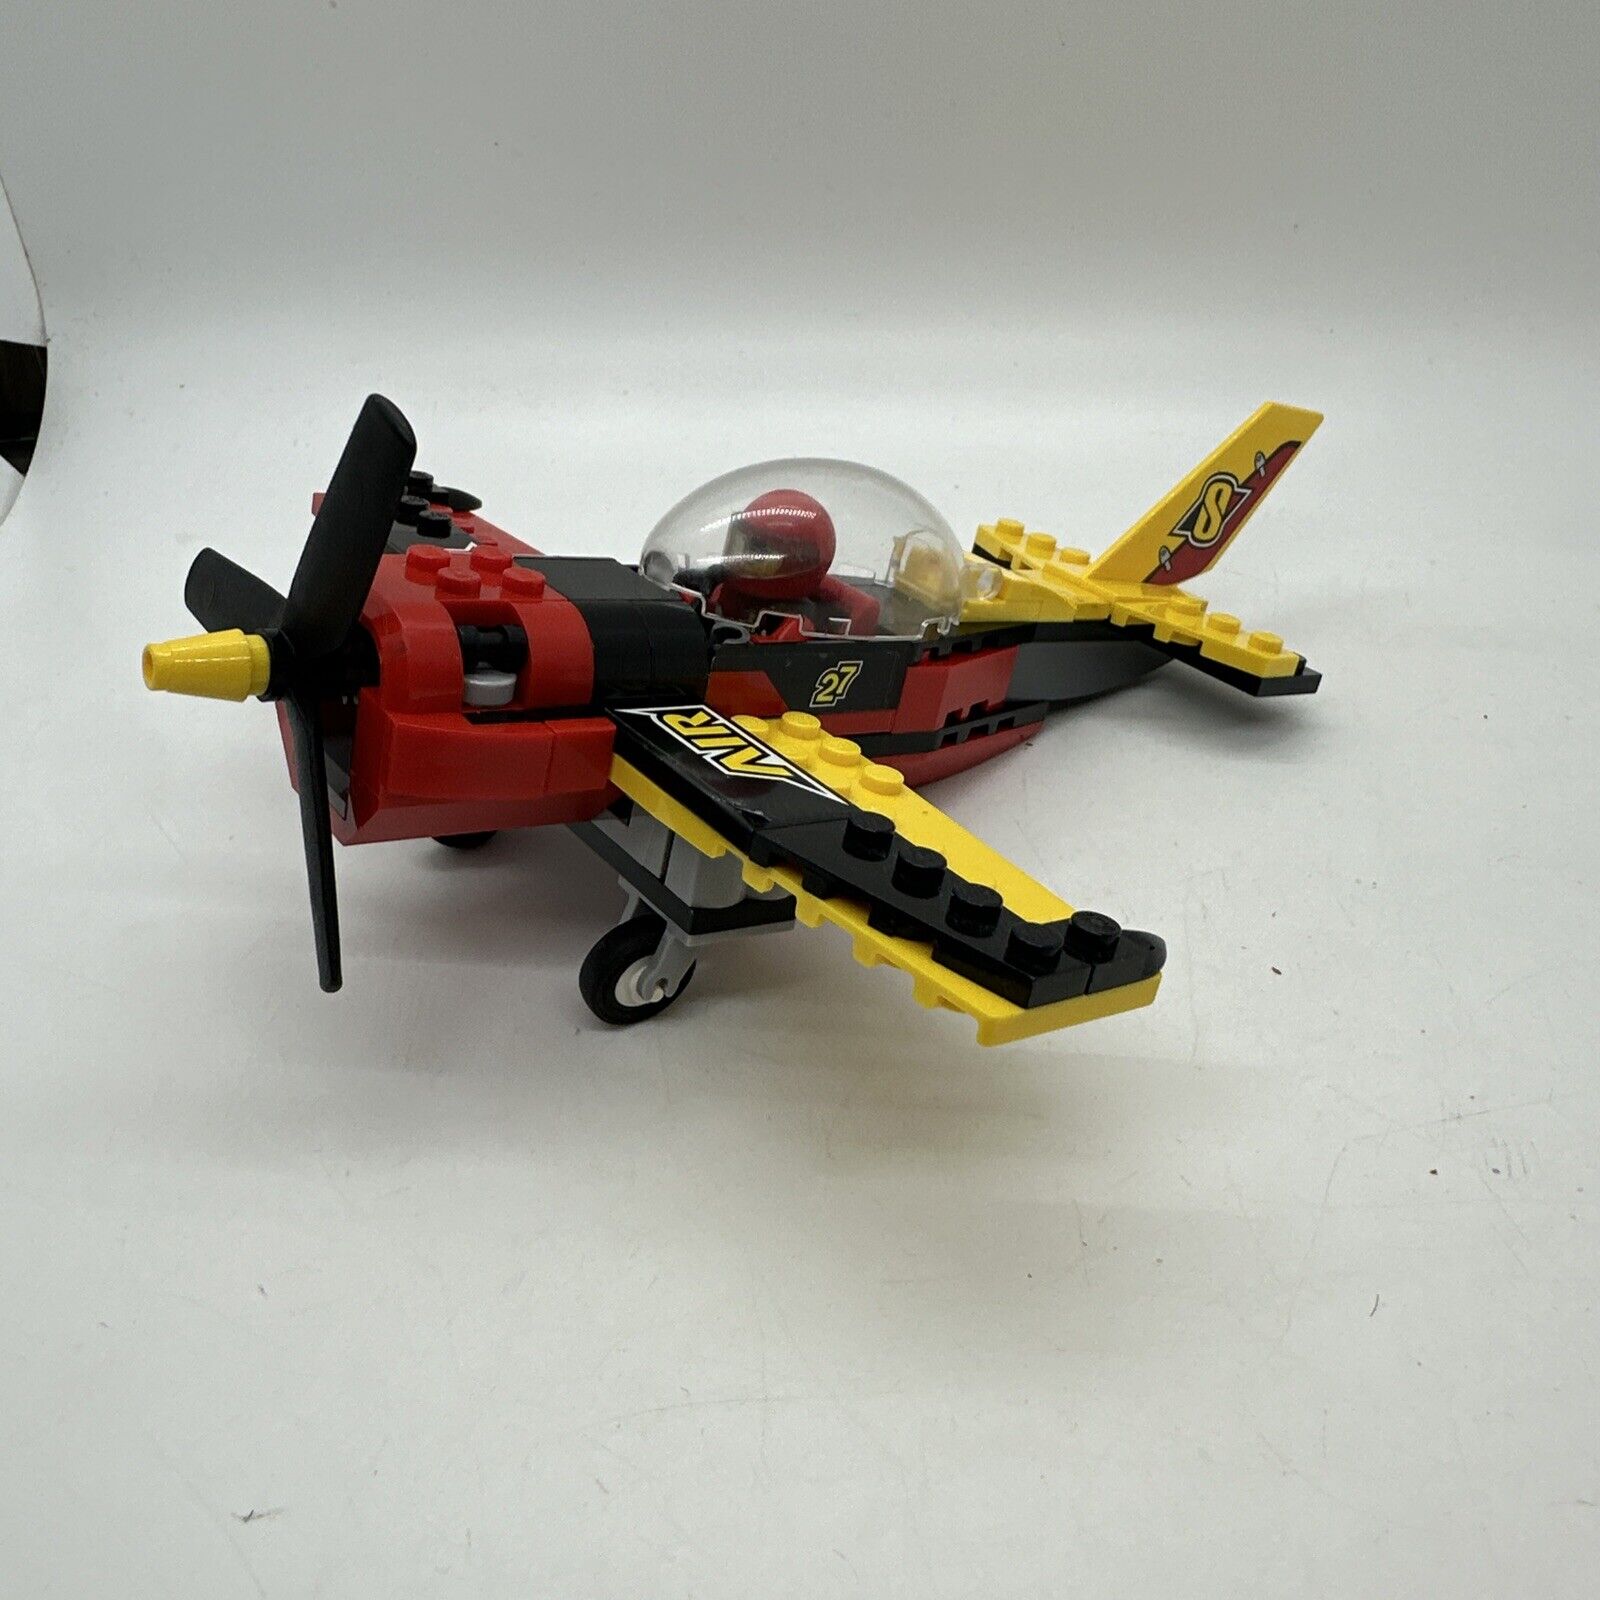 LEGO CITY: Race Plane (60144) Read